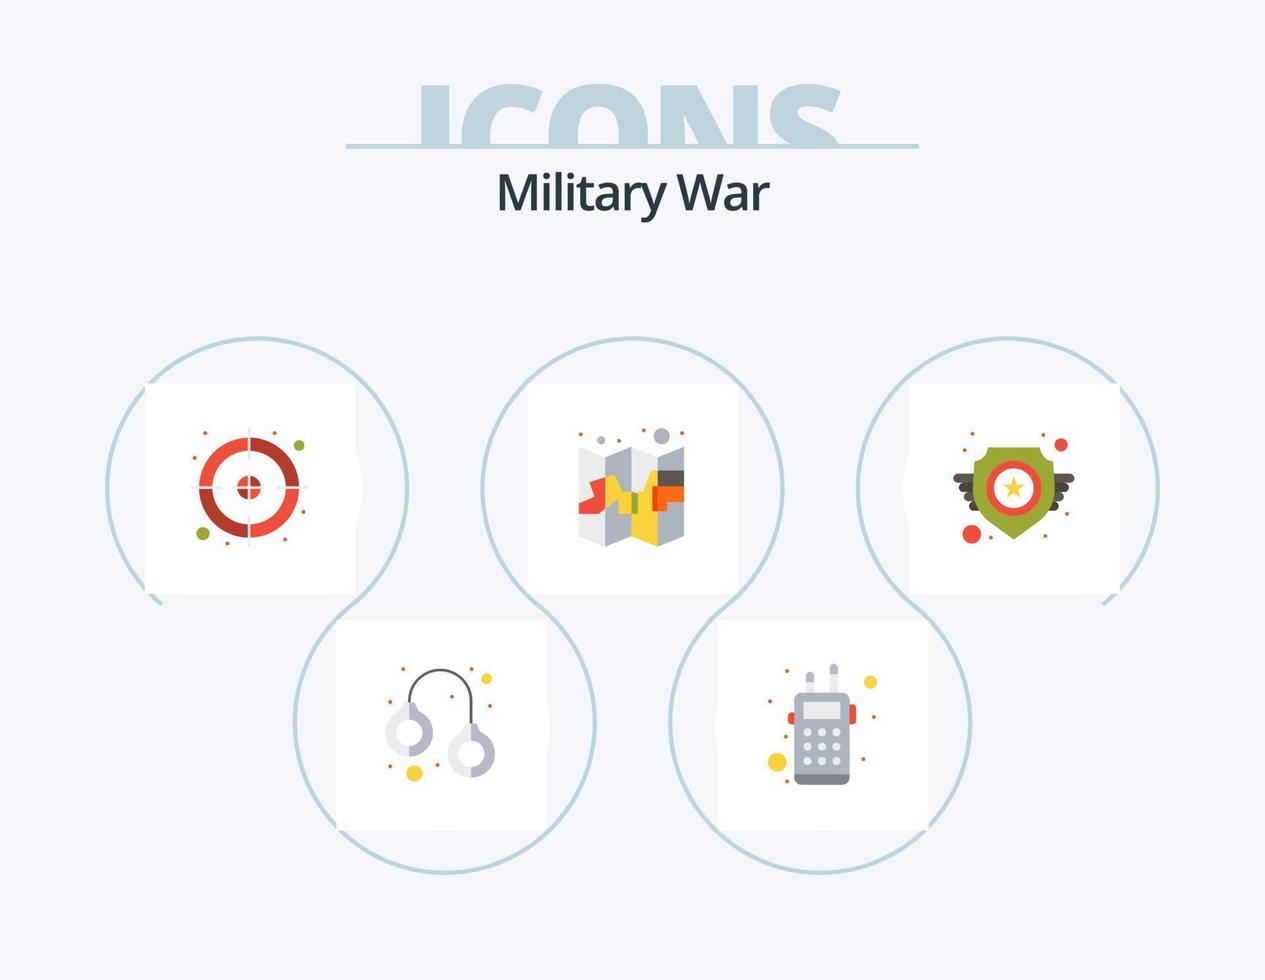 design de ícone plano de pacote de 5 ícones de guerra militar. força. PIN. mirar. mapa. exército vetor